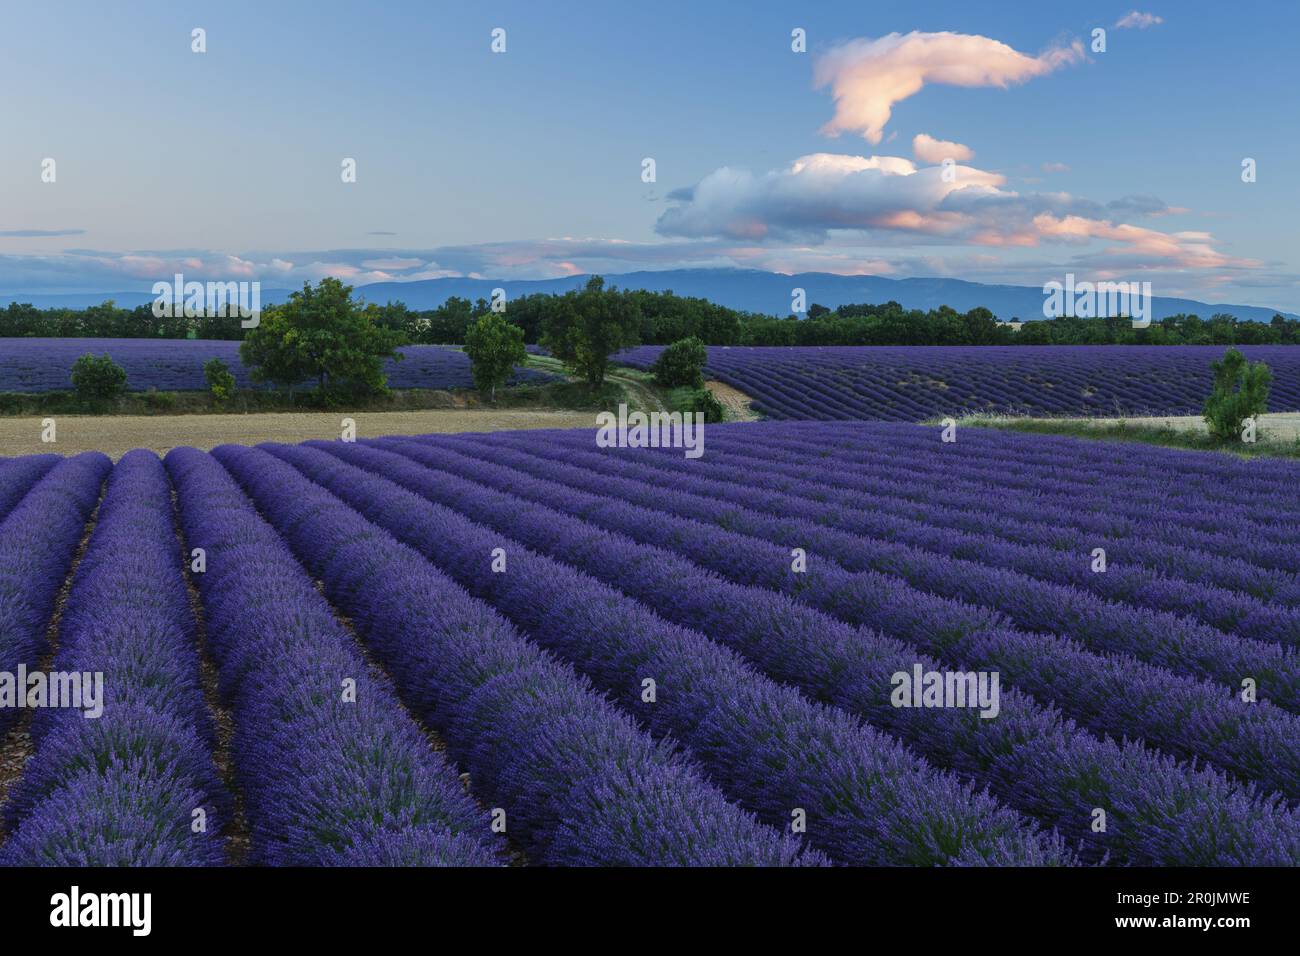 lavender fields, lavender, lat. Lavendula angustifolia, high plateau of Valensole, Plateau de Valensole, near Valensole, Alpes-de-Haute-Provence, Prov Stock Photo